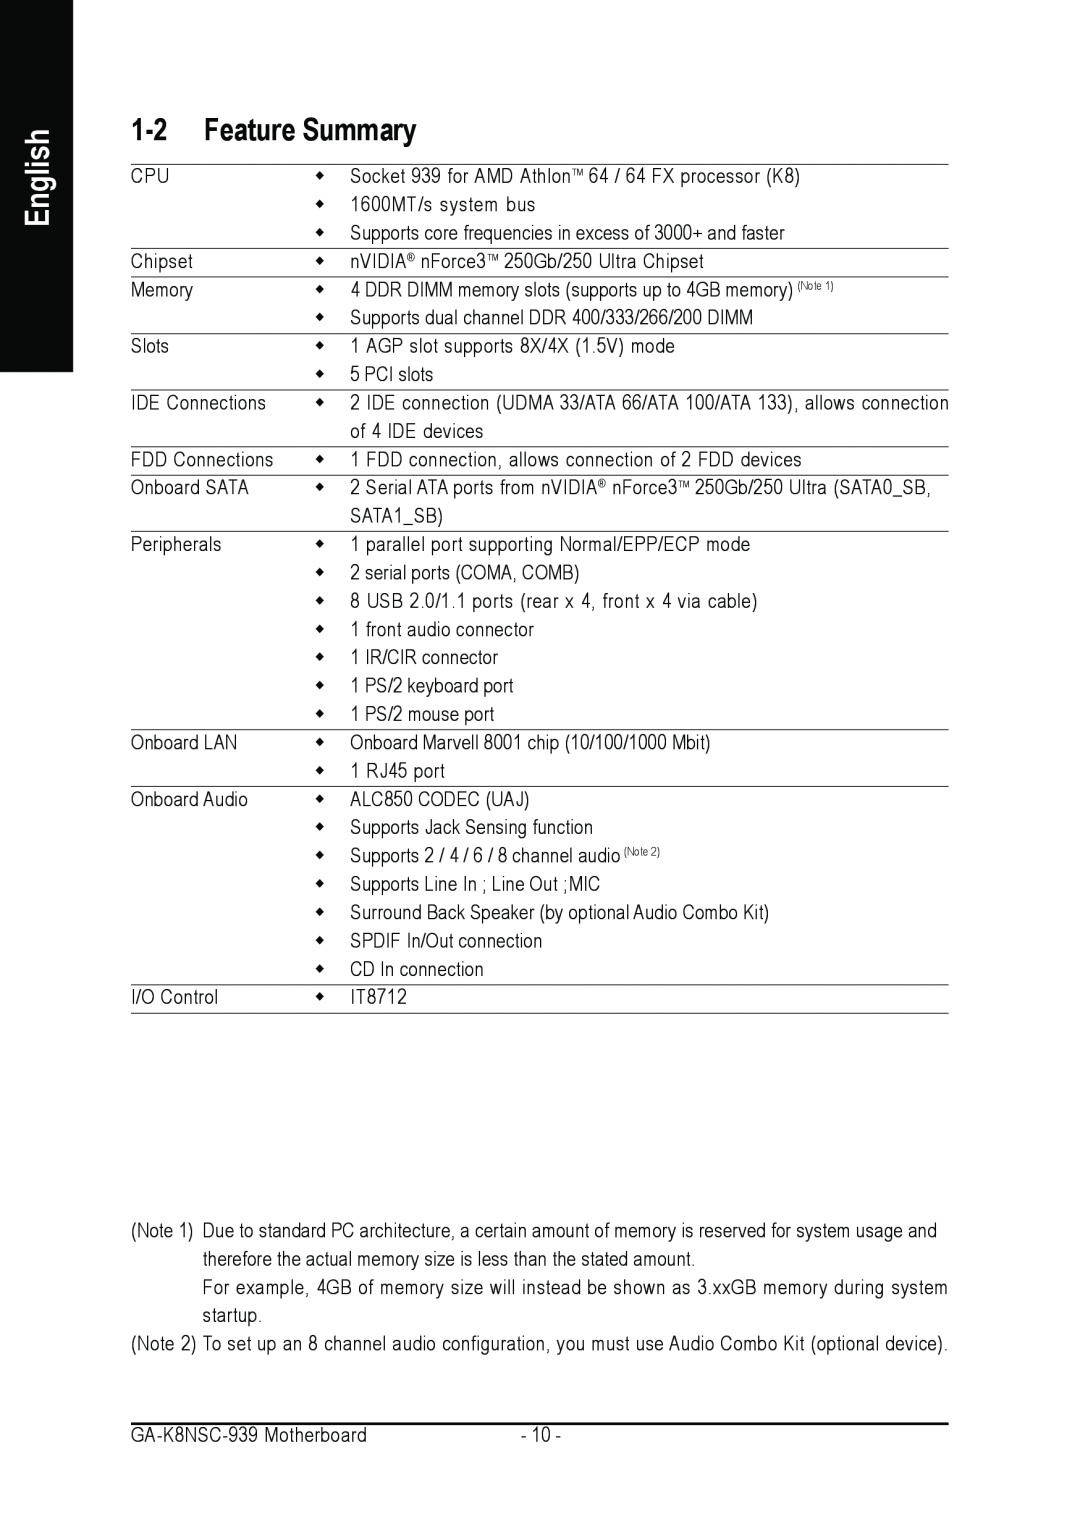 AMD GA-K8NSC-939 user manual Feature Summary, English, IDE connection UDMA 33/ATA 66/ATA 100/ATA 133, allows connection 